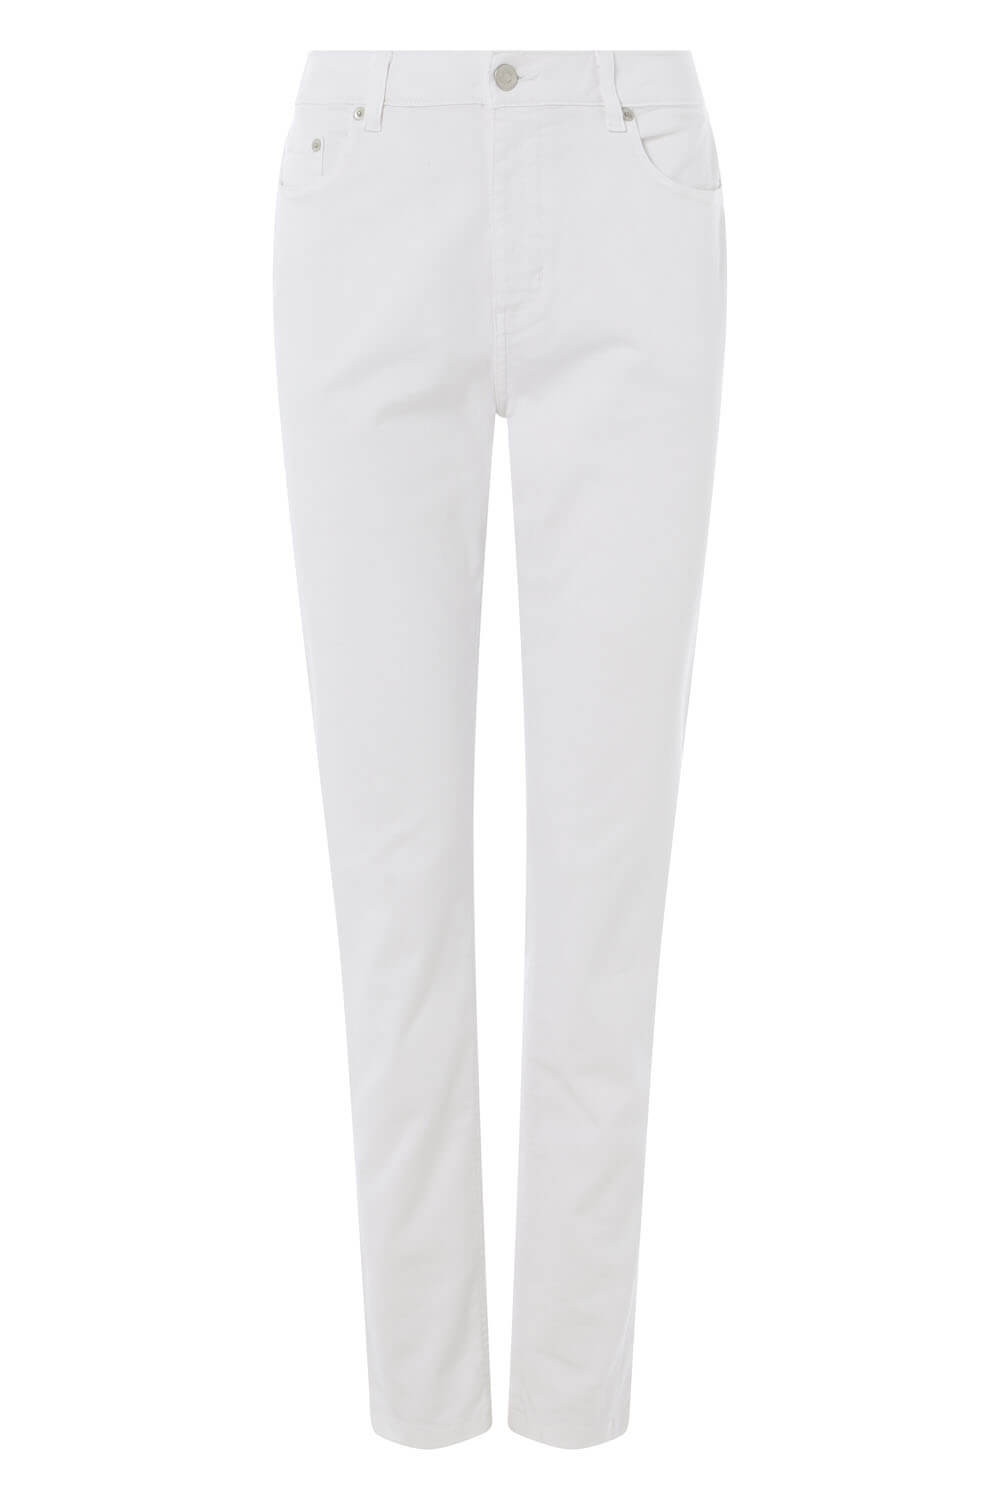 White Full Length Tailored Jeans, Image 5 of 5